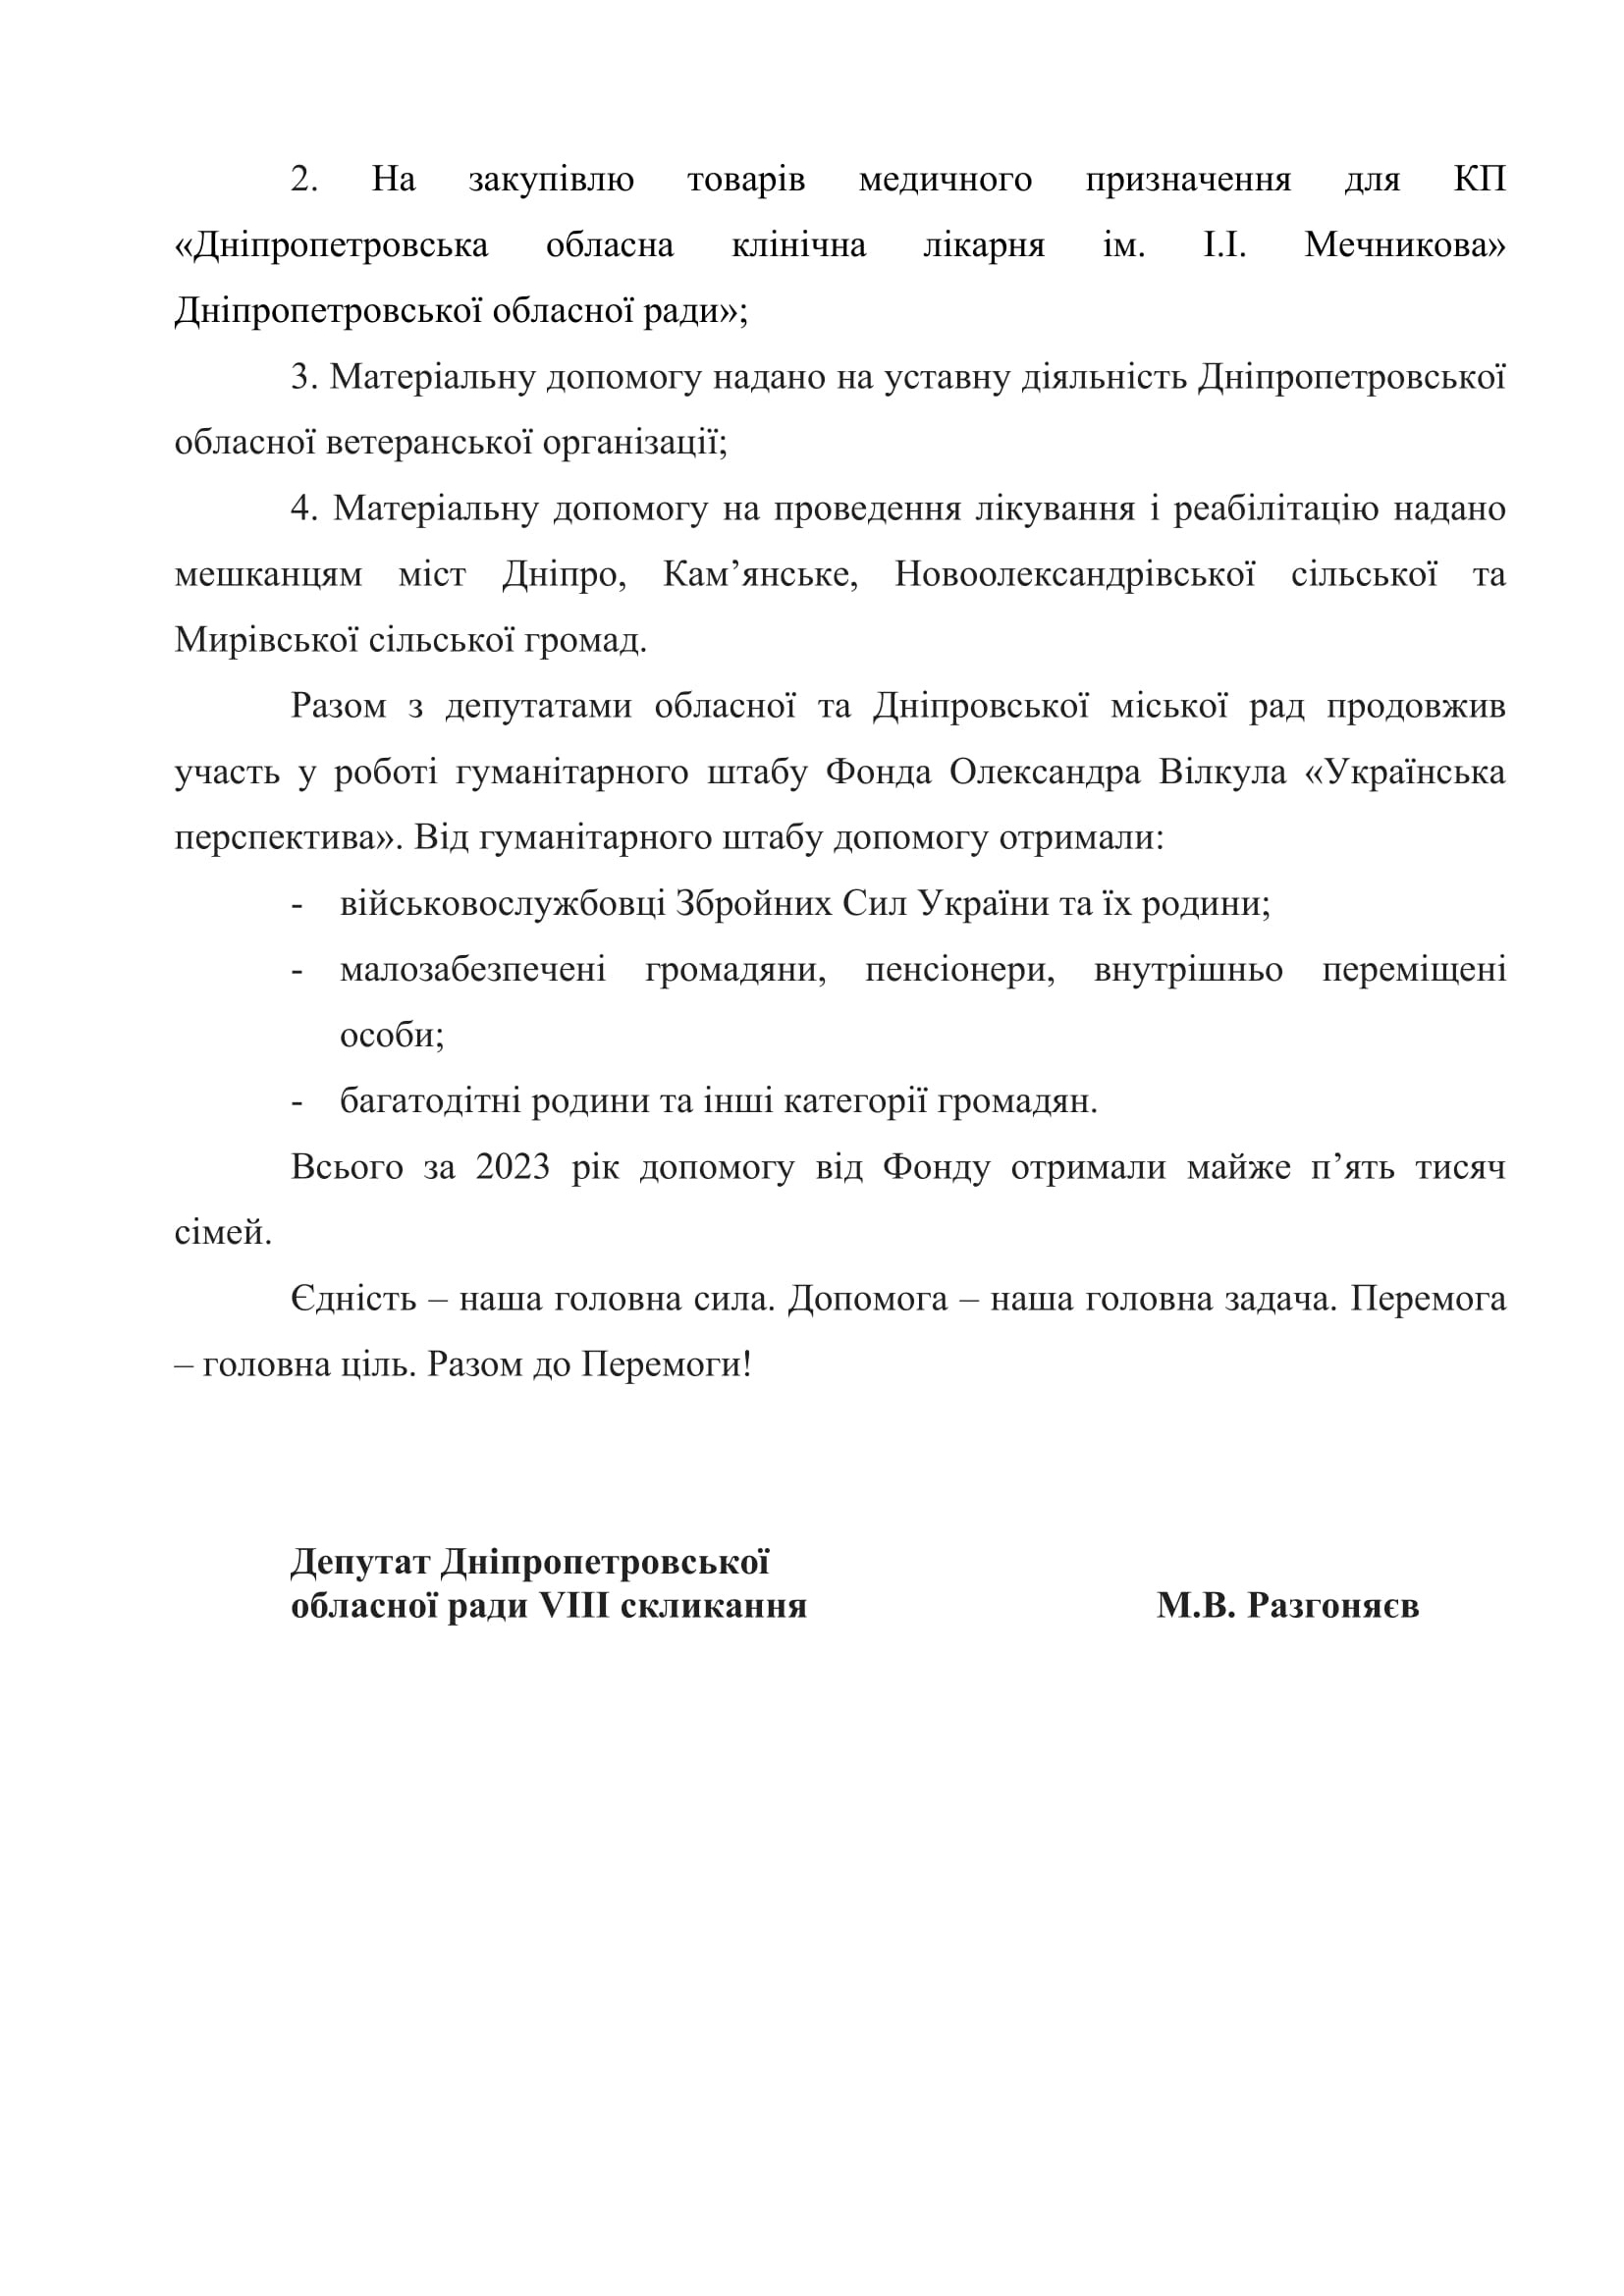 Звіт депутата обласної ради Разгоняєва МВ за 2023 рік-2